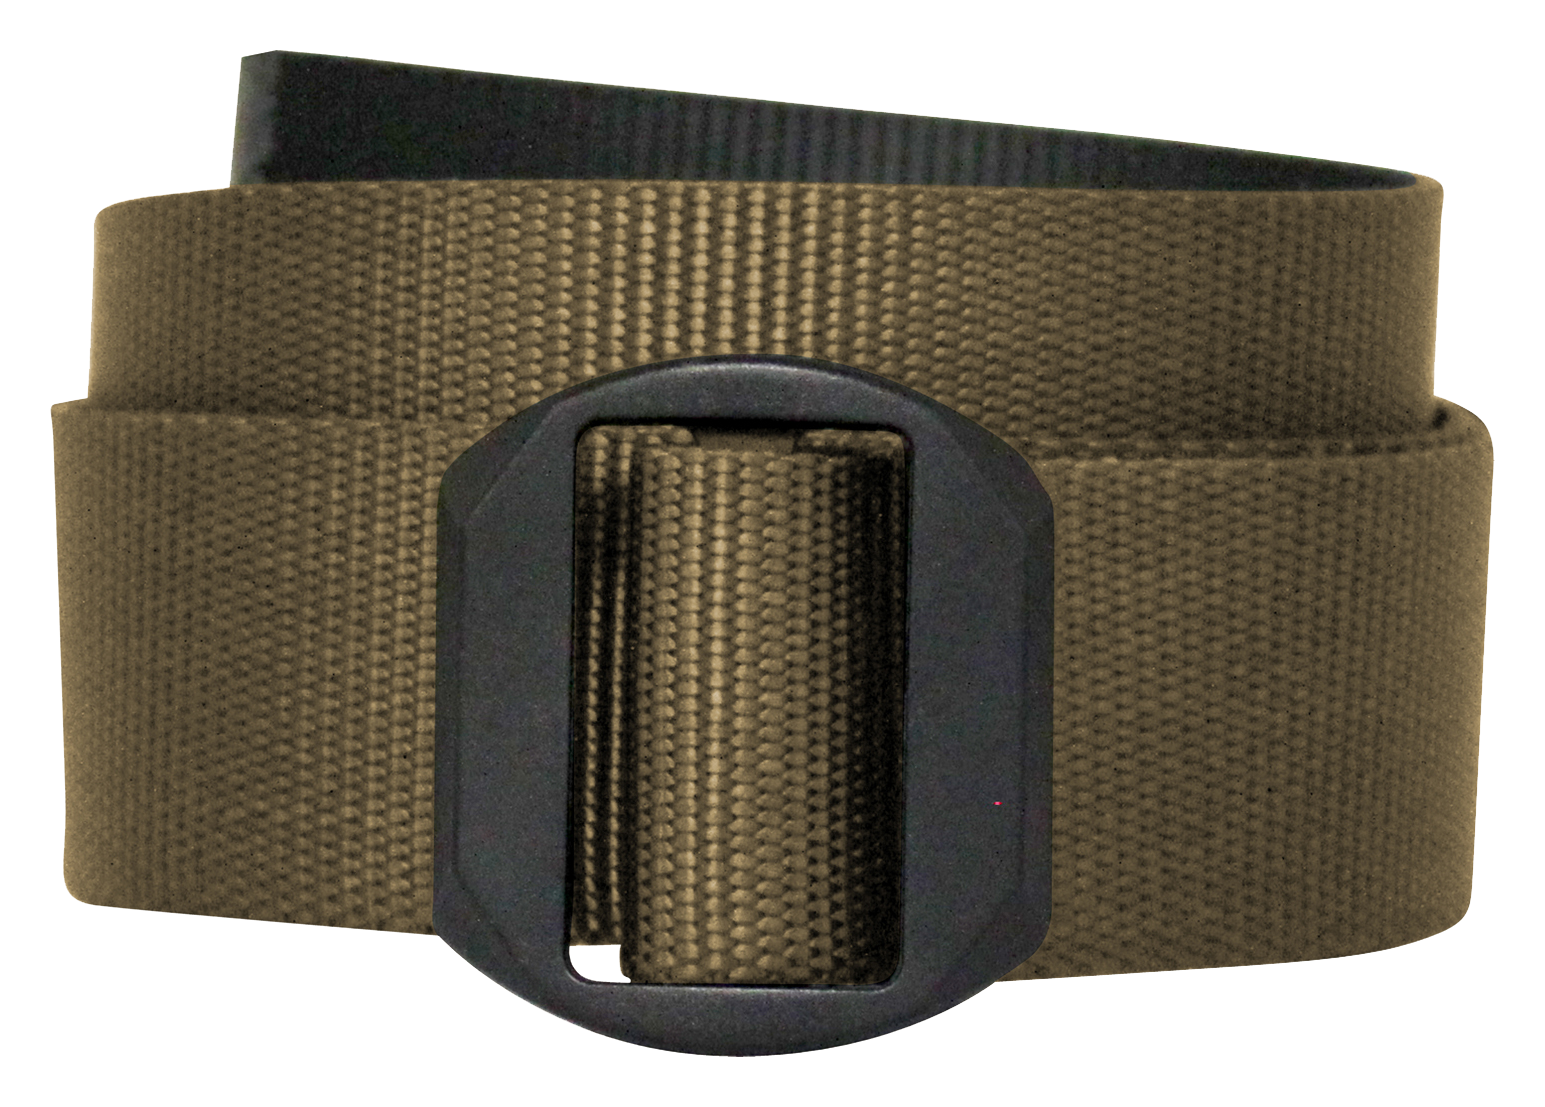 Bison Designs 38mm Elliptagon Reversible Belt - Black/Coyote Brown - 2XL